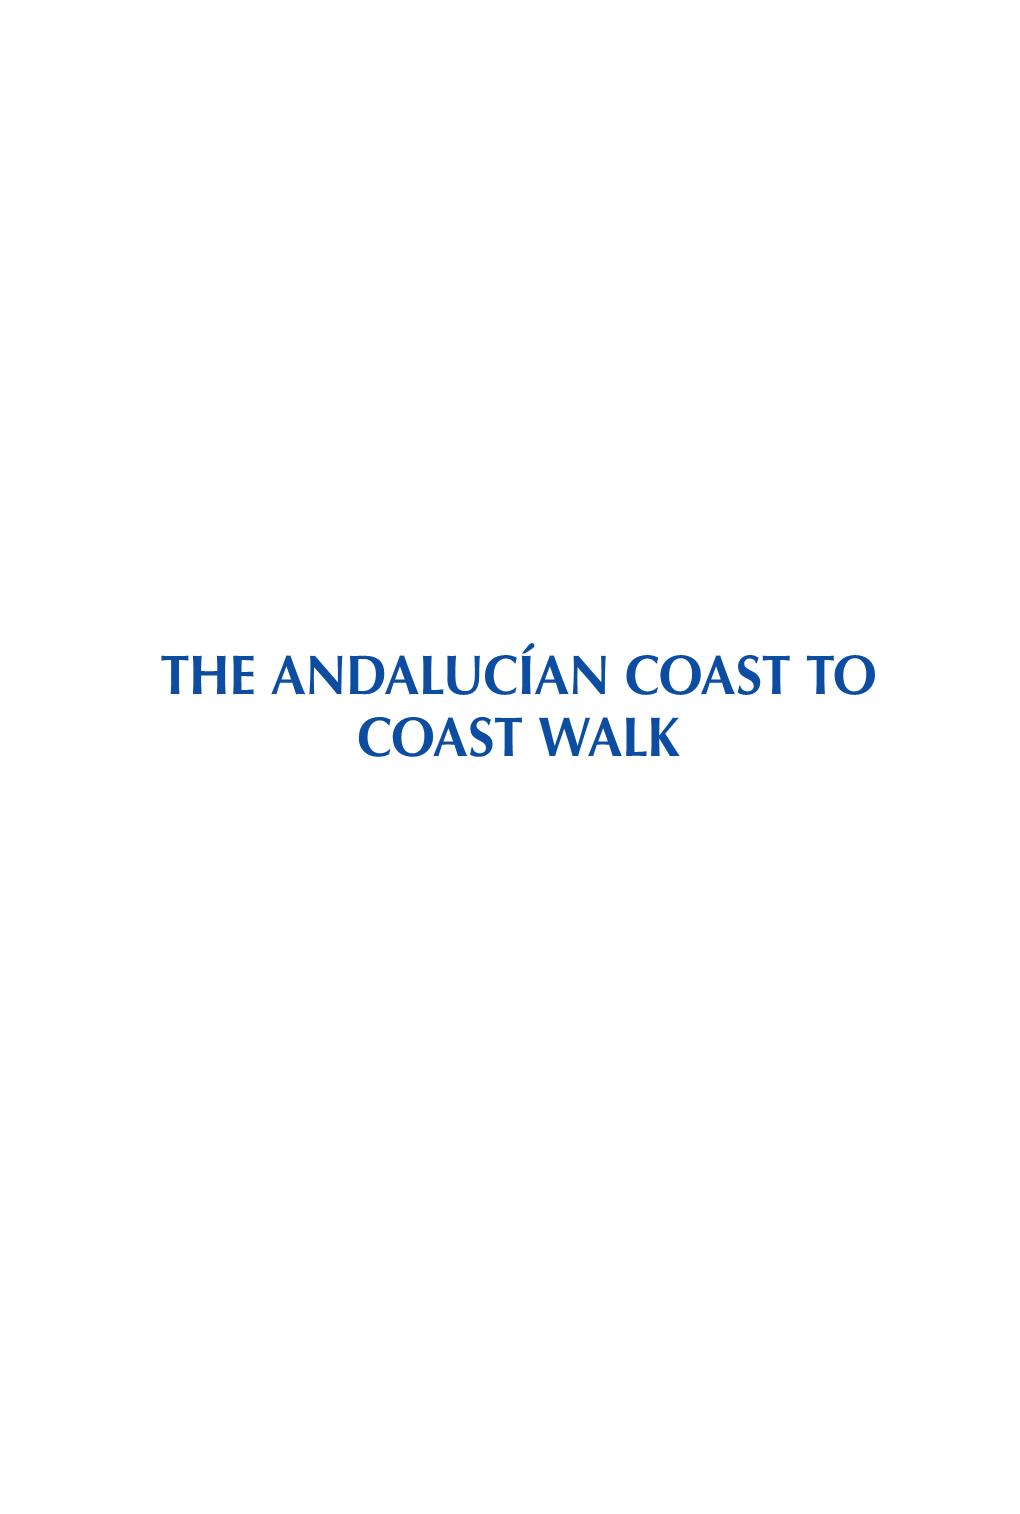 The Andalucían Coast to Coast Walk